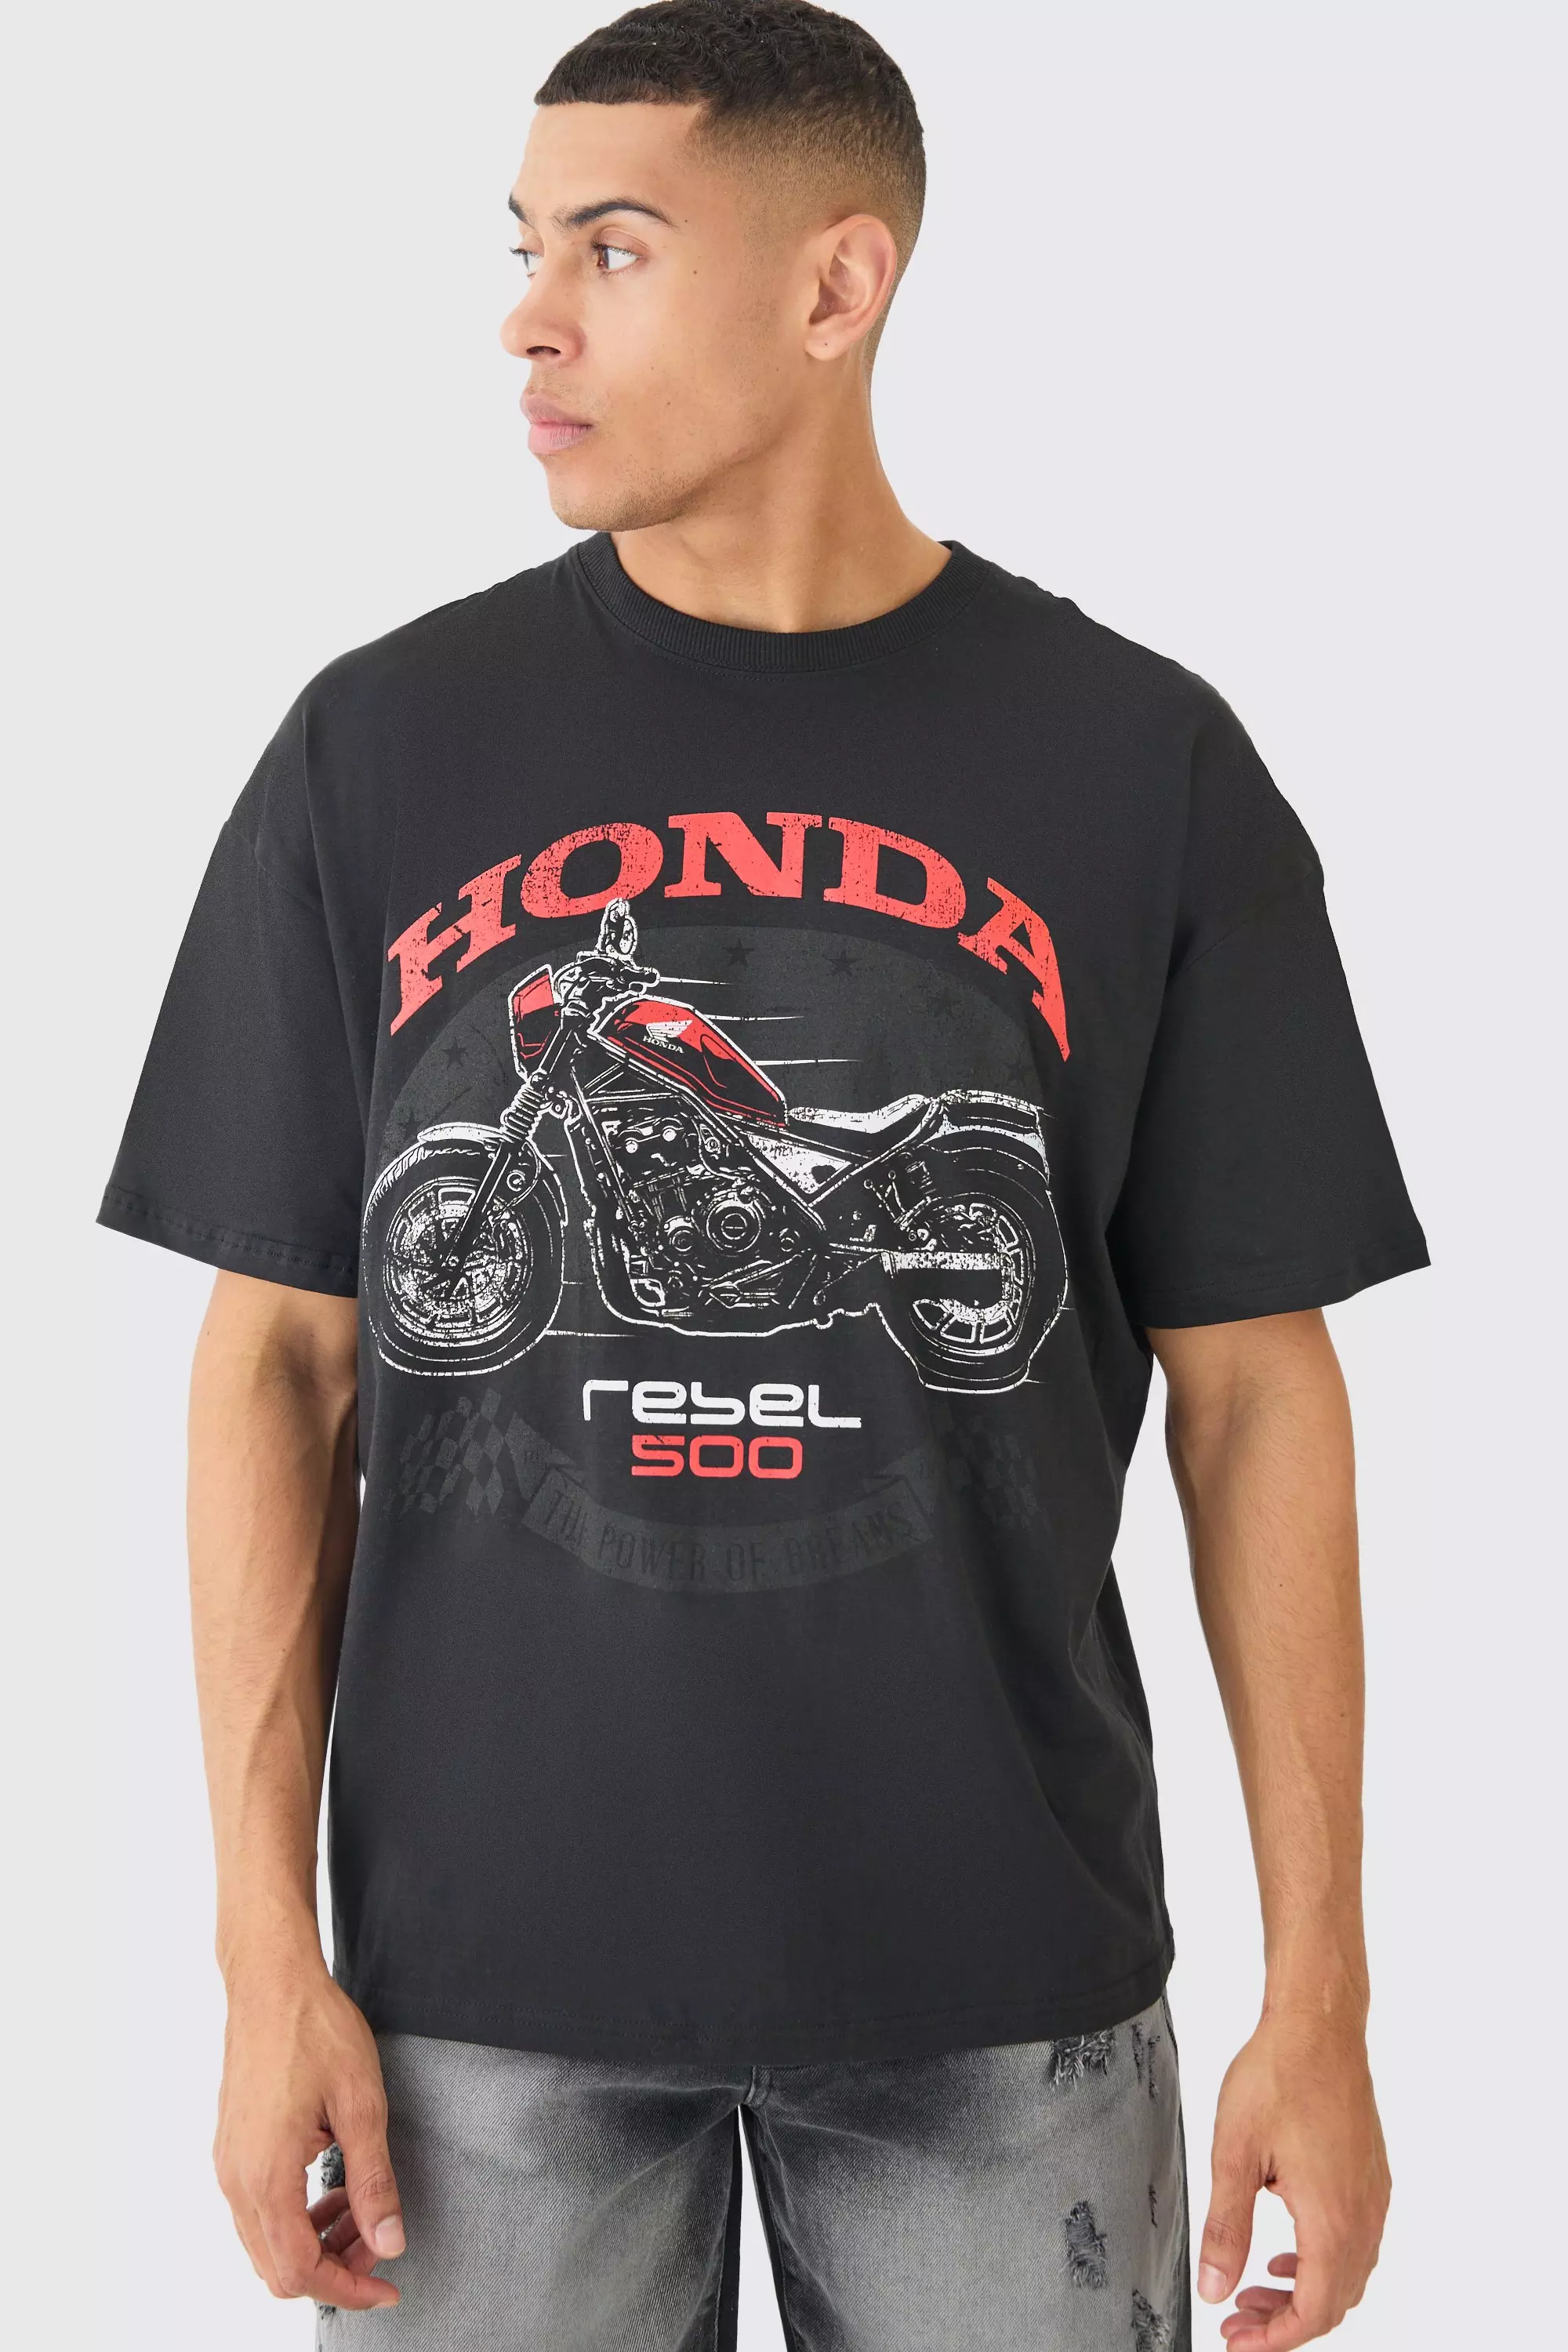 Oversized Honda Motorcylcle License T-shirt Black